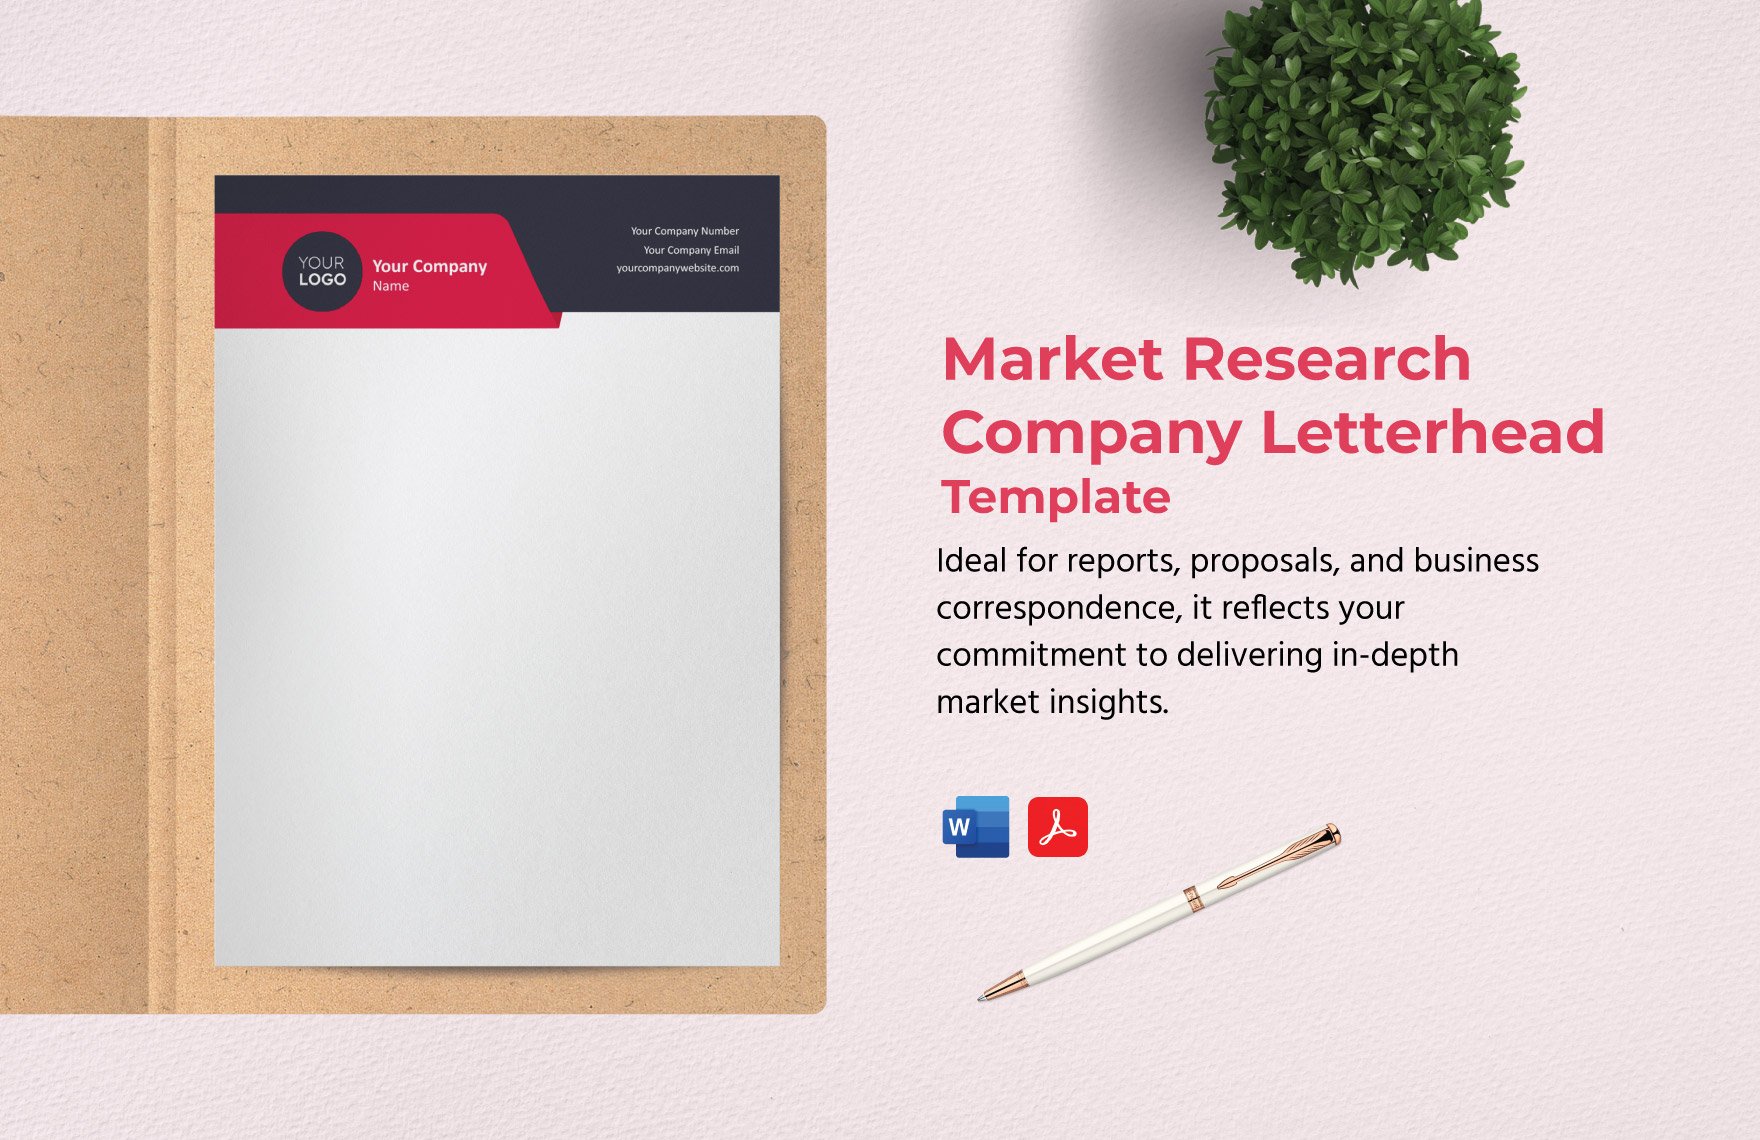 Market Research Company Letterhead Template